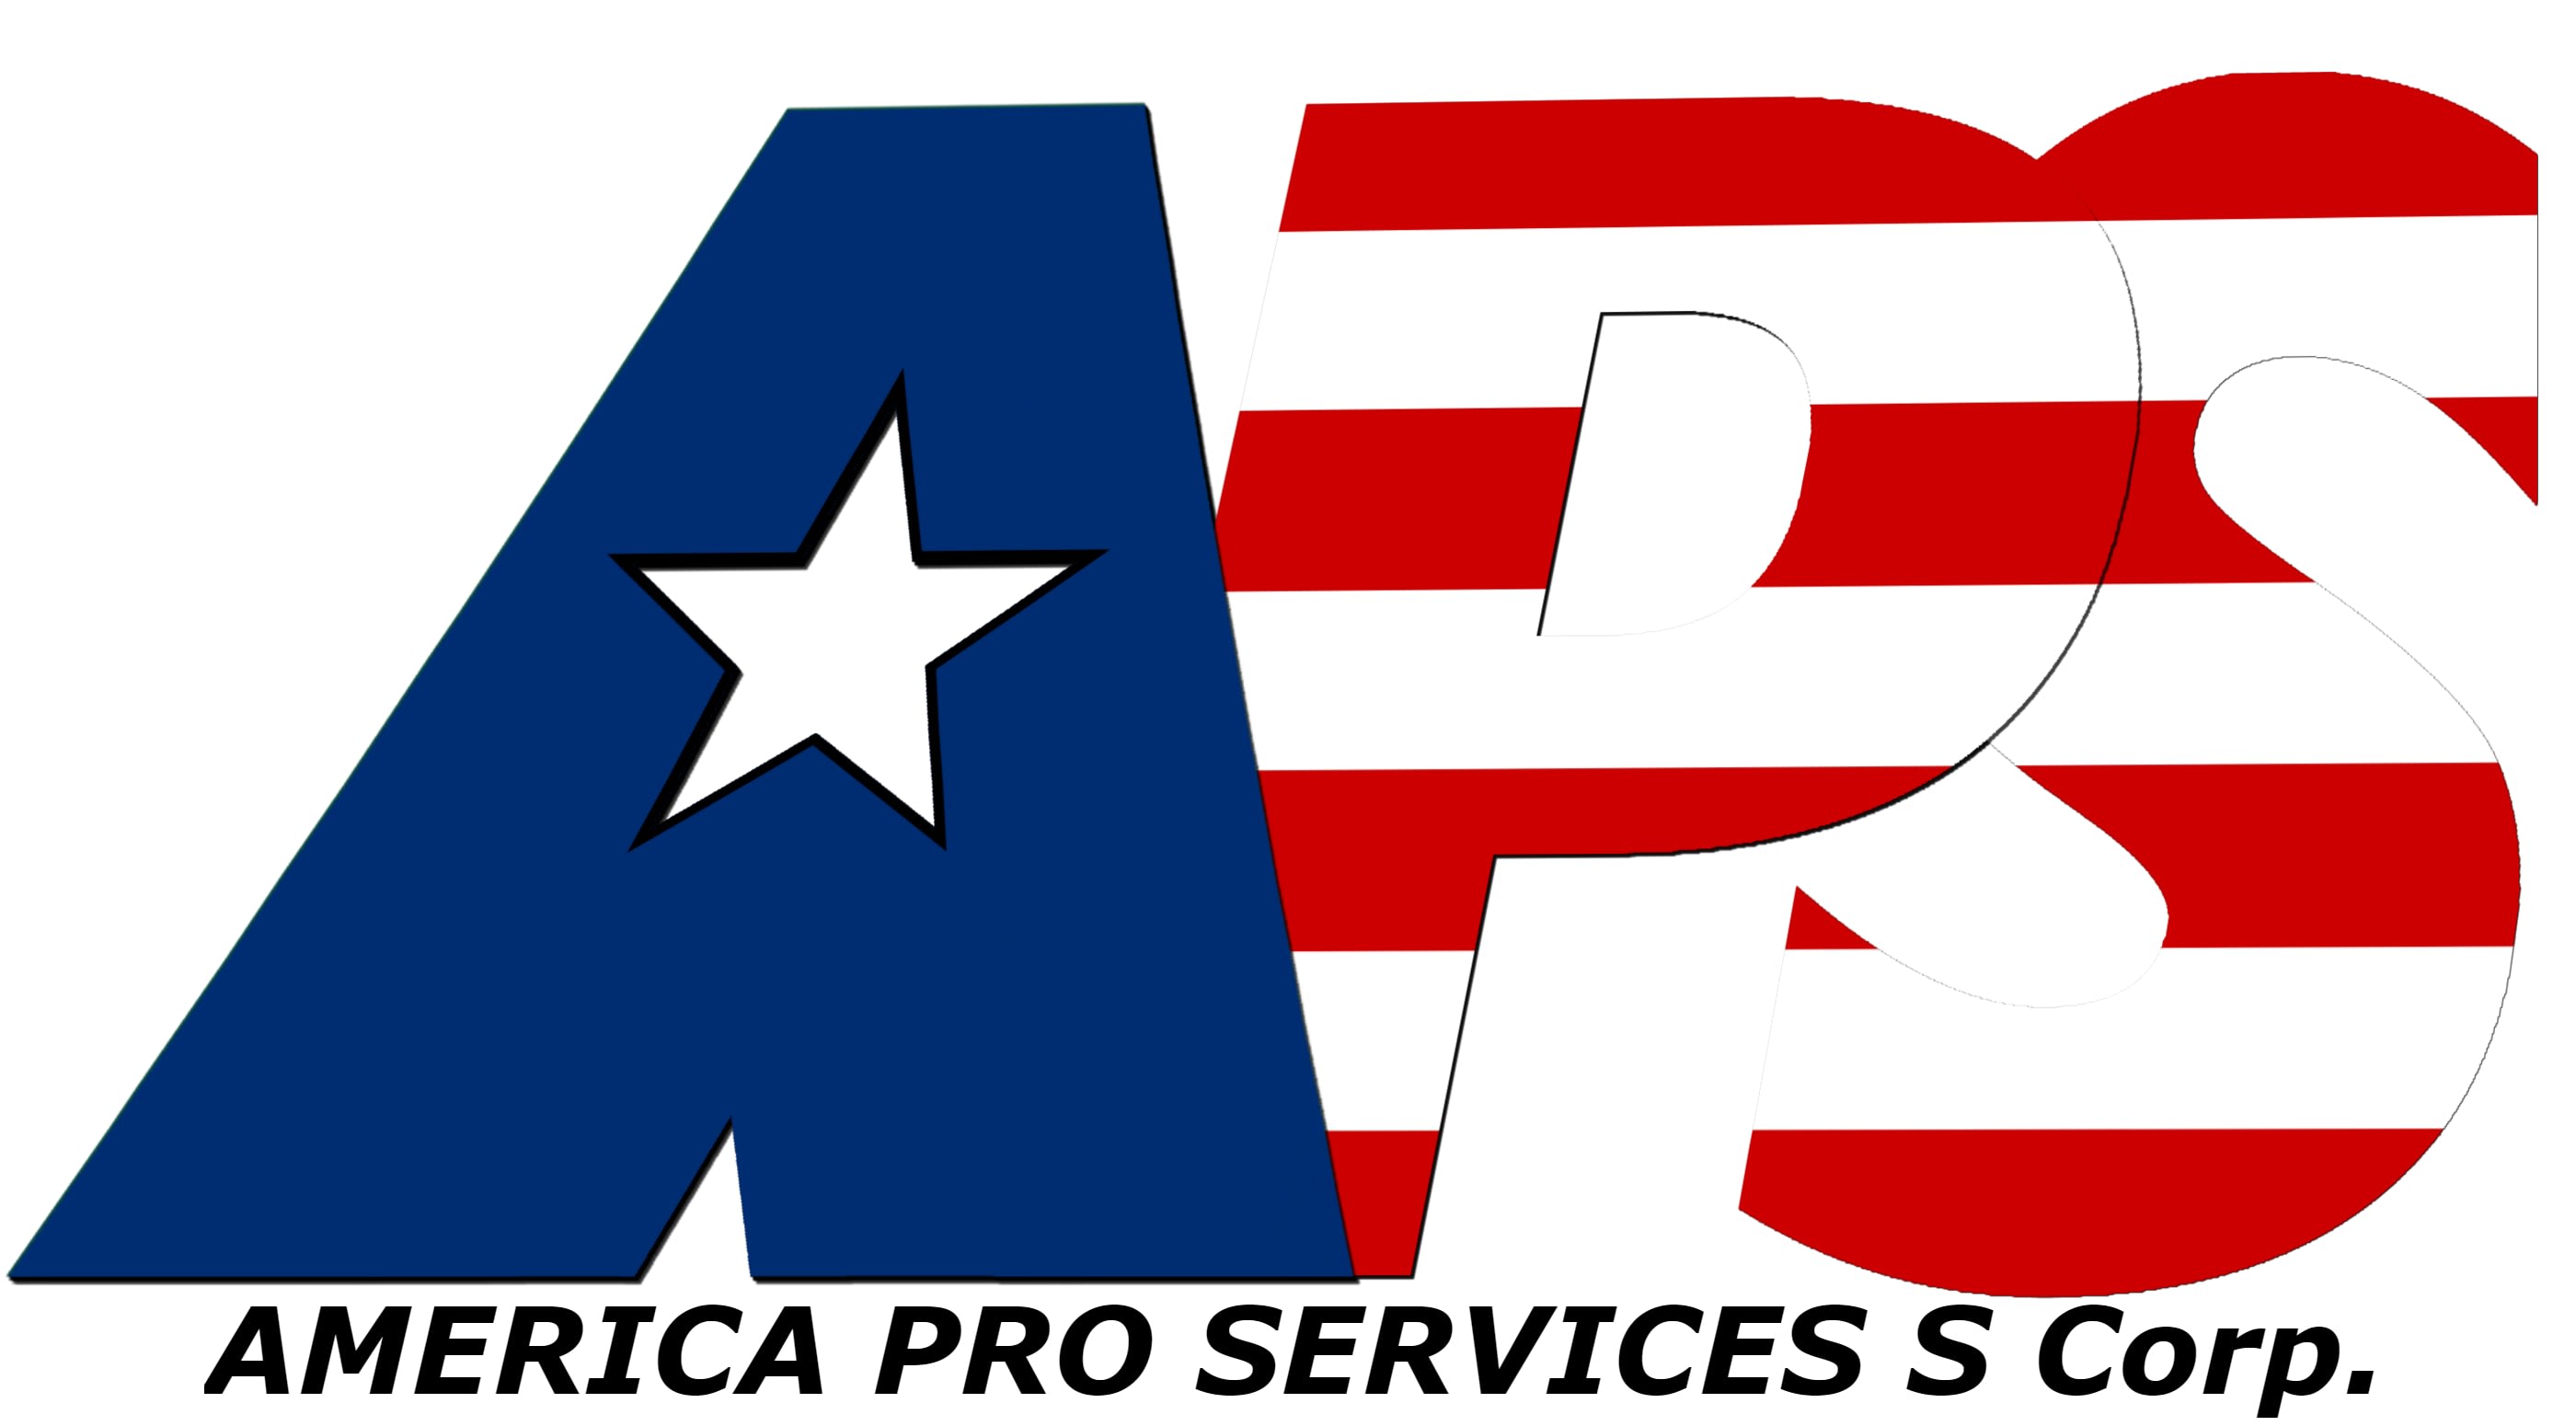 America Pro Services S Corp